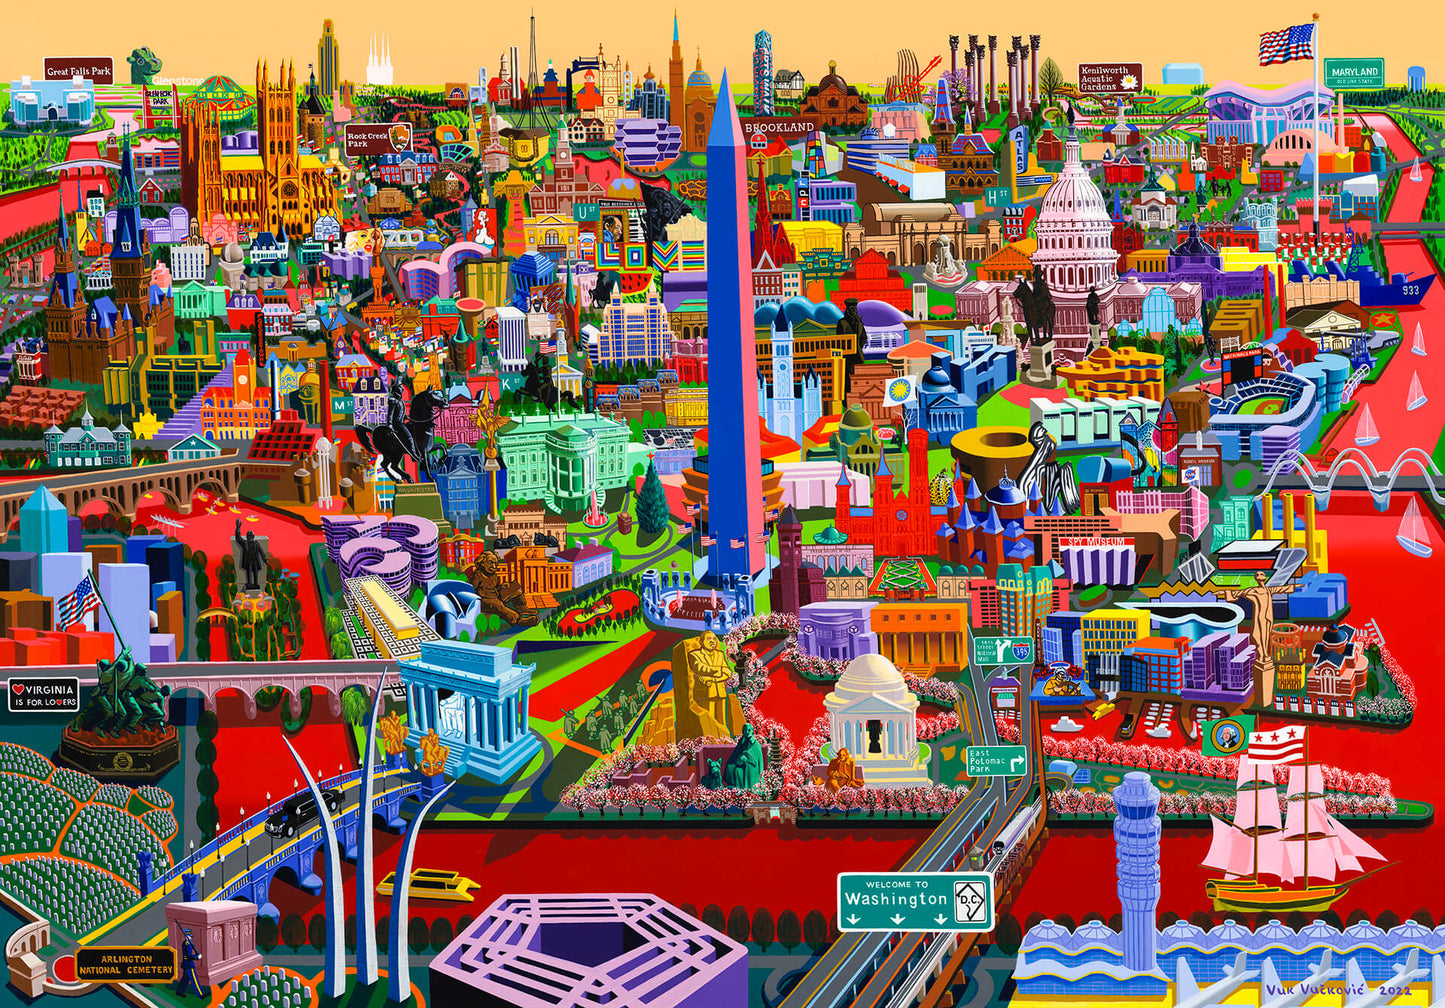 Washington - Exciting Cities by the artist Vuk Vuckovic